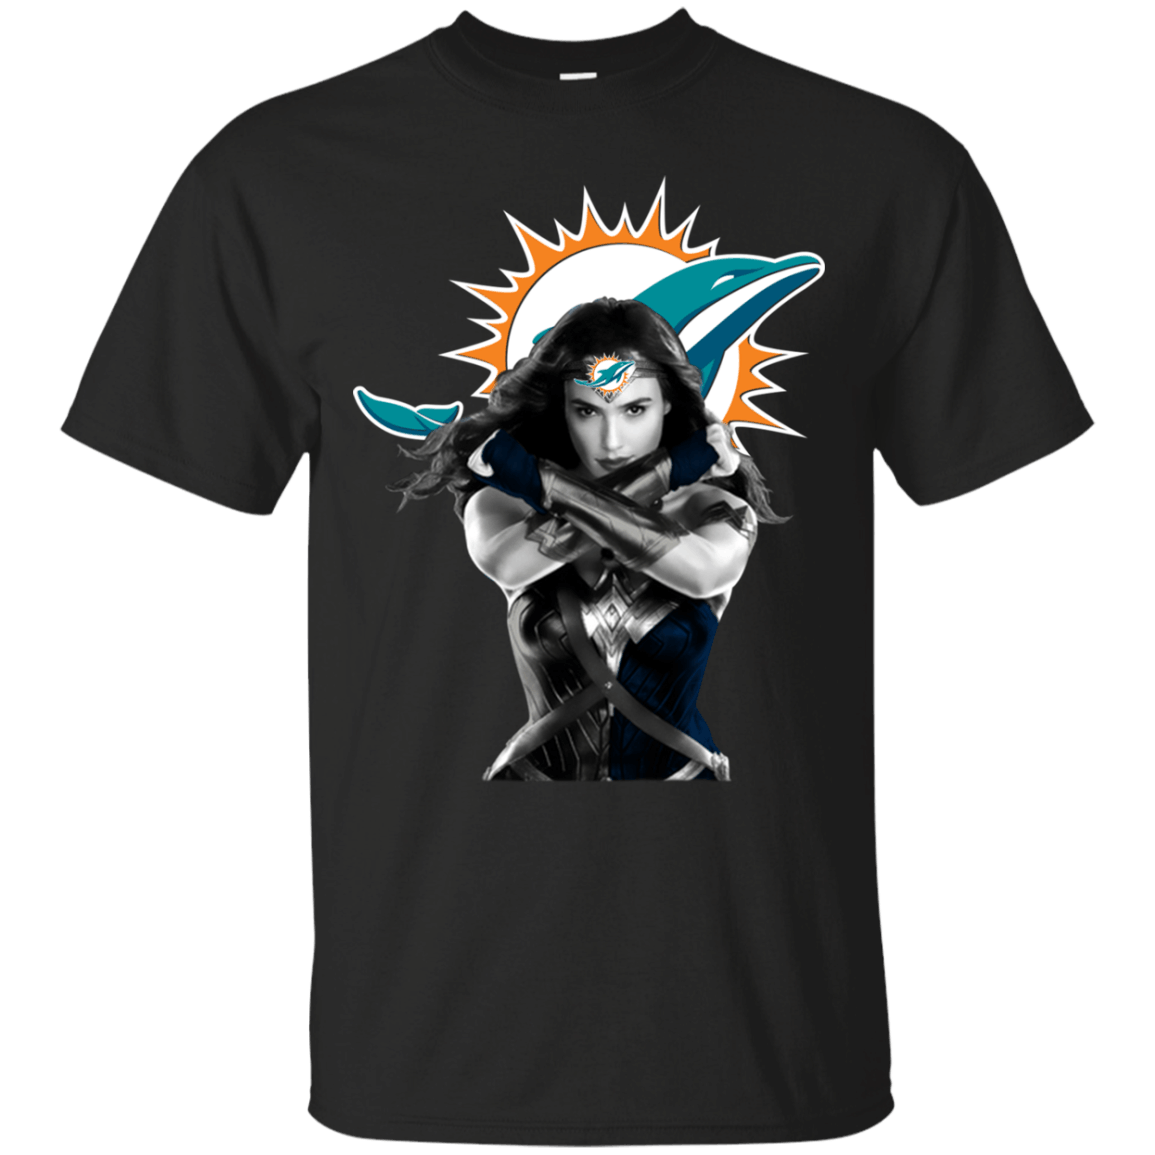 Miami Dolphins Shop - Wonder Woman Miami Dolphins T shirt 1